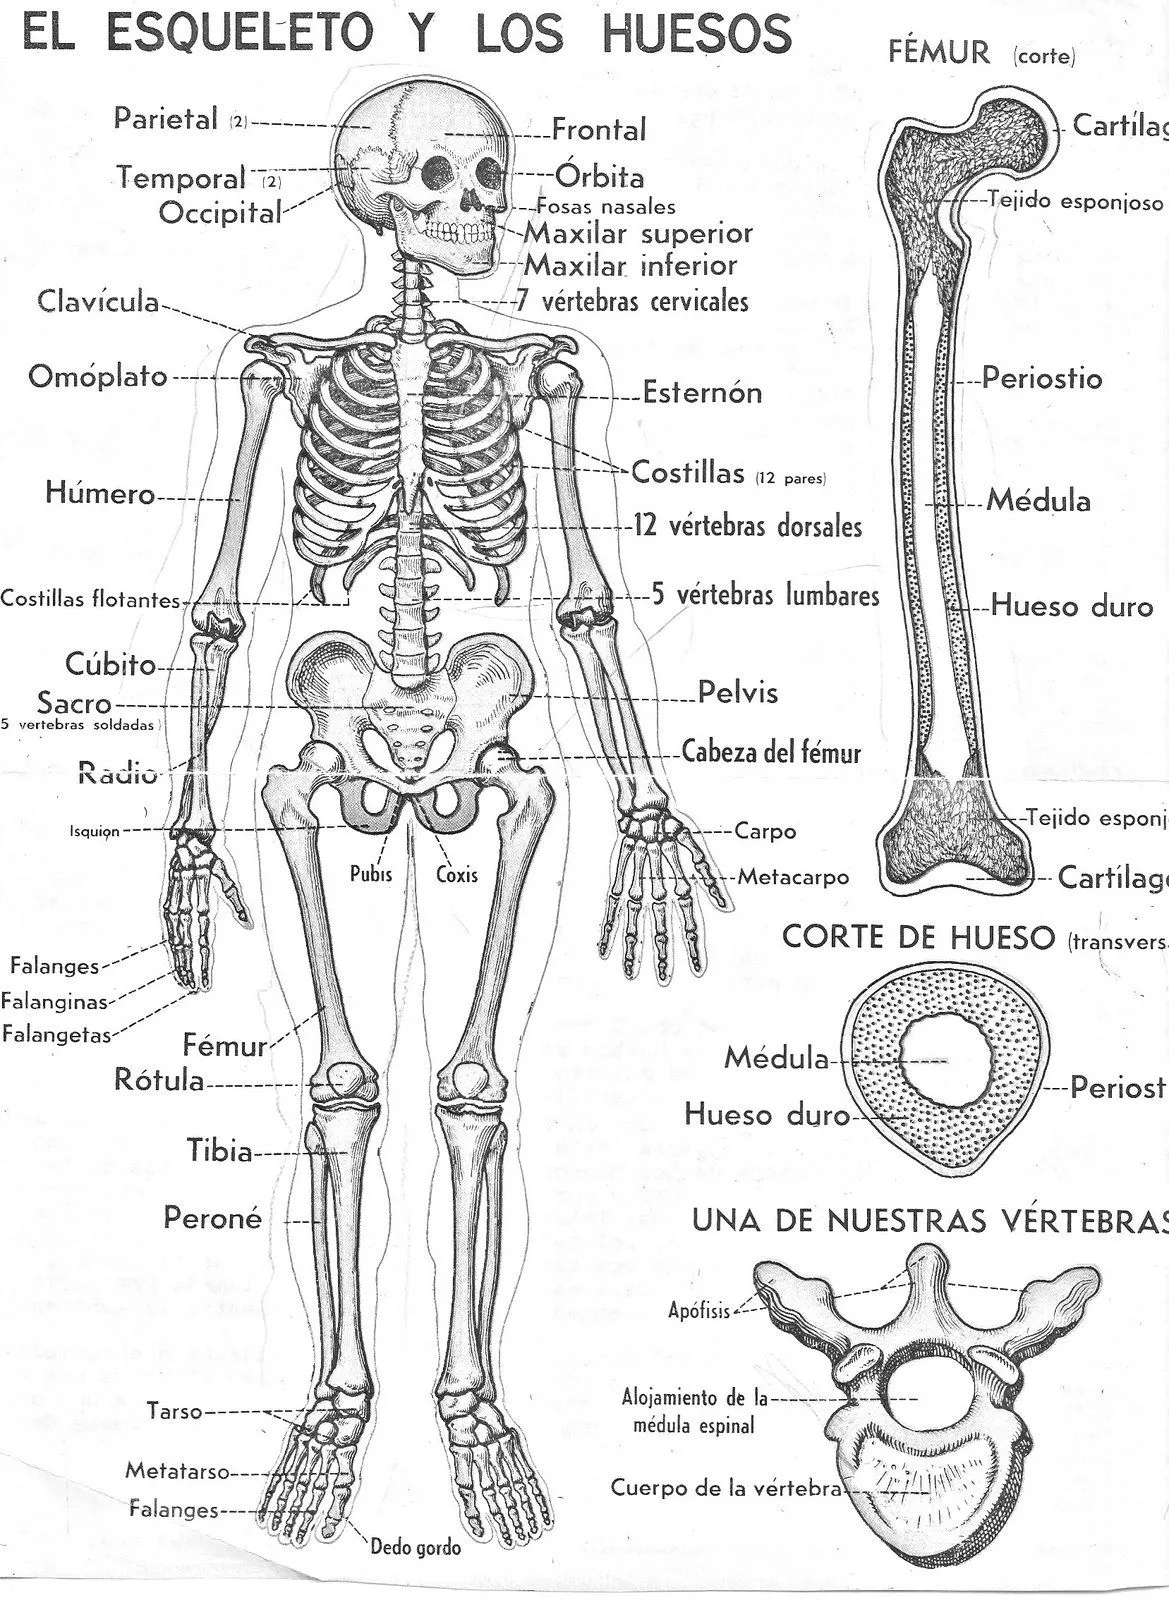 Numero de huesos - SISTEMA ÓSEO